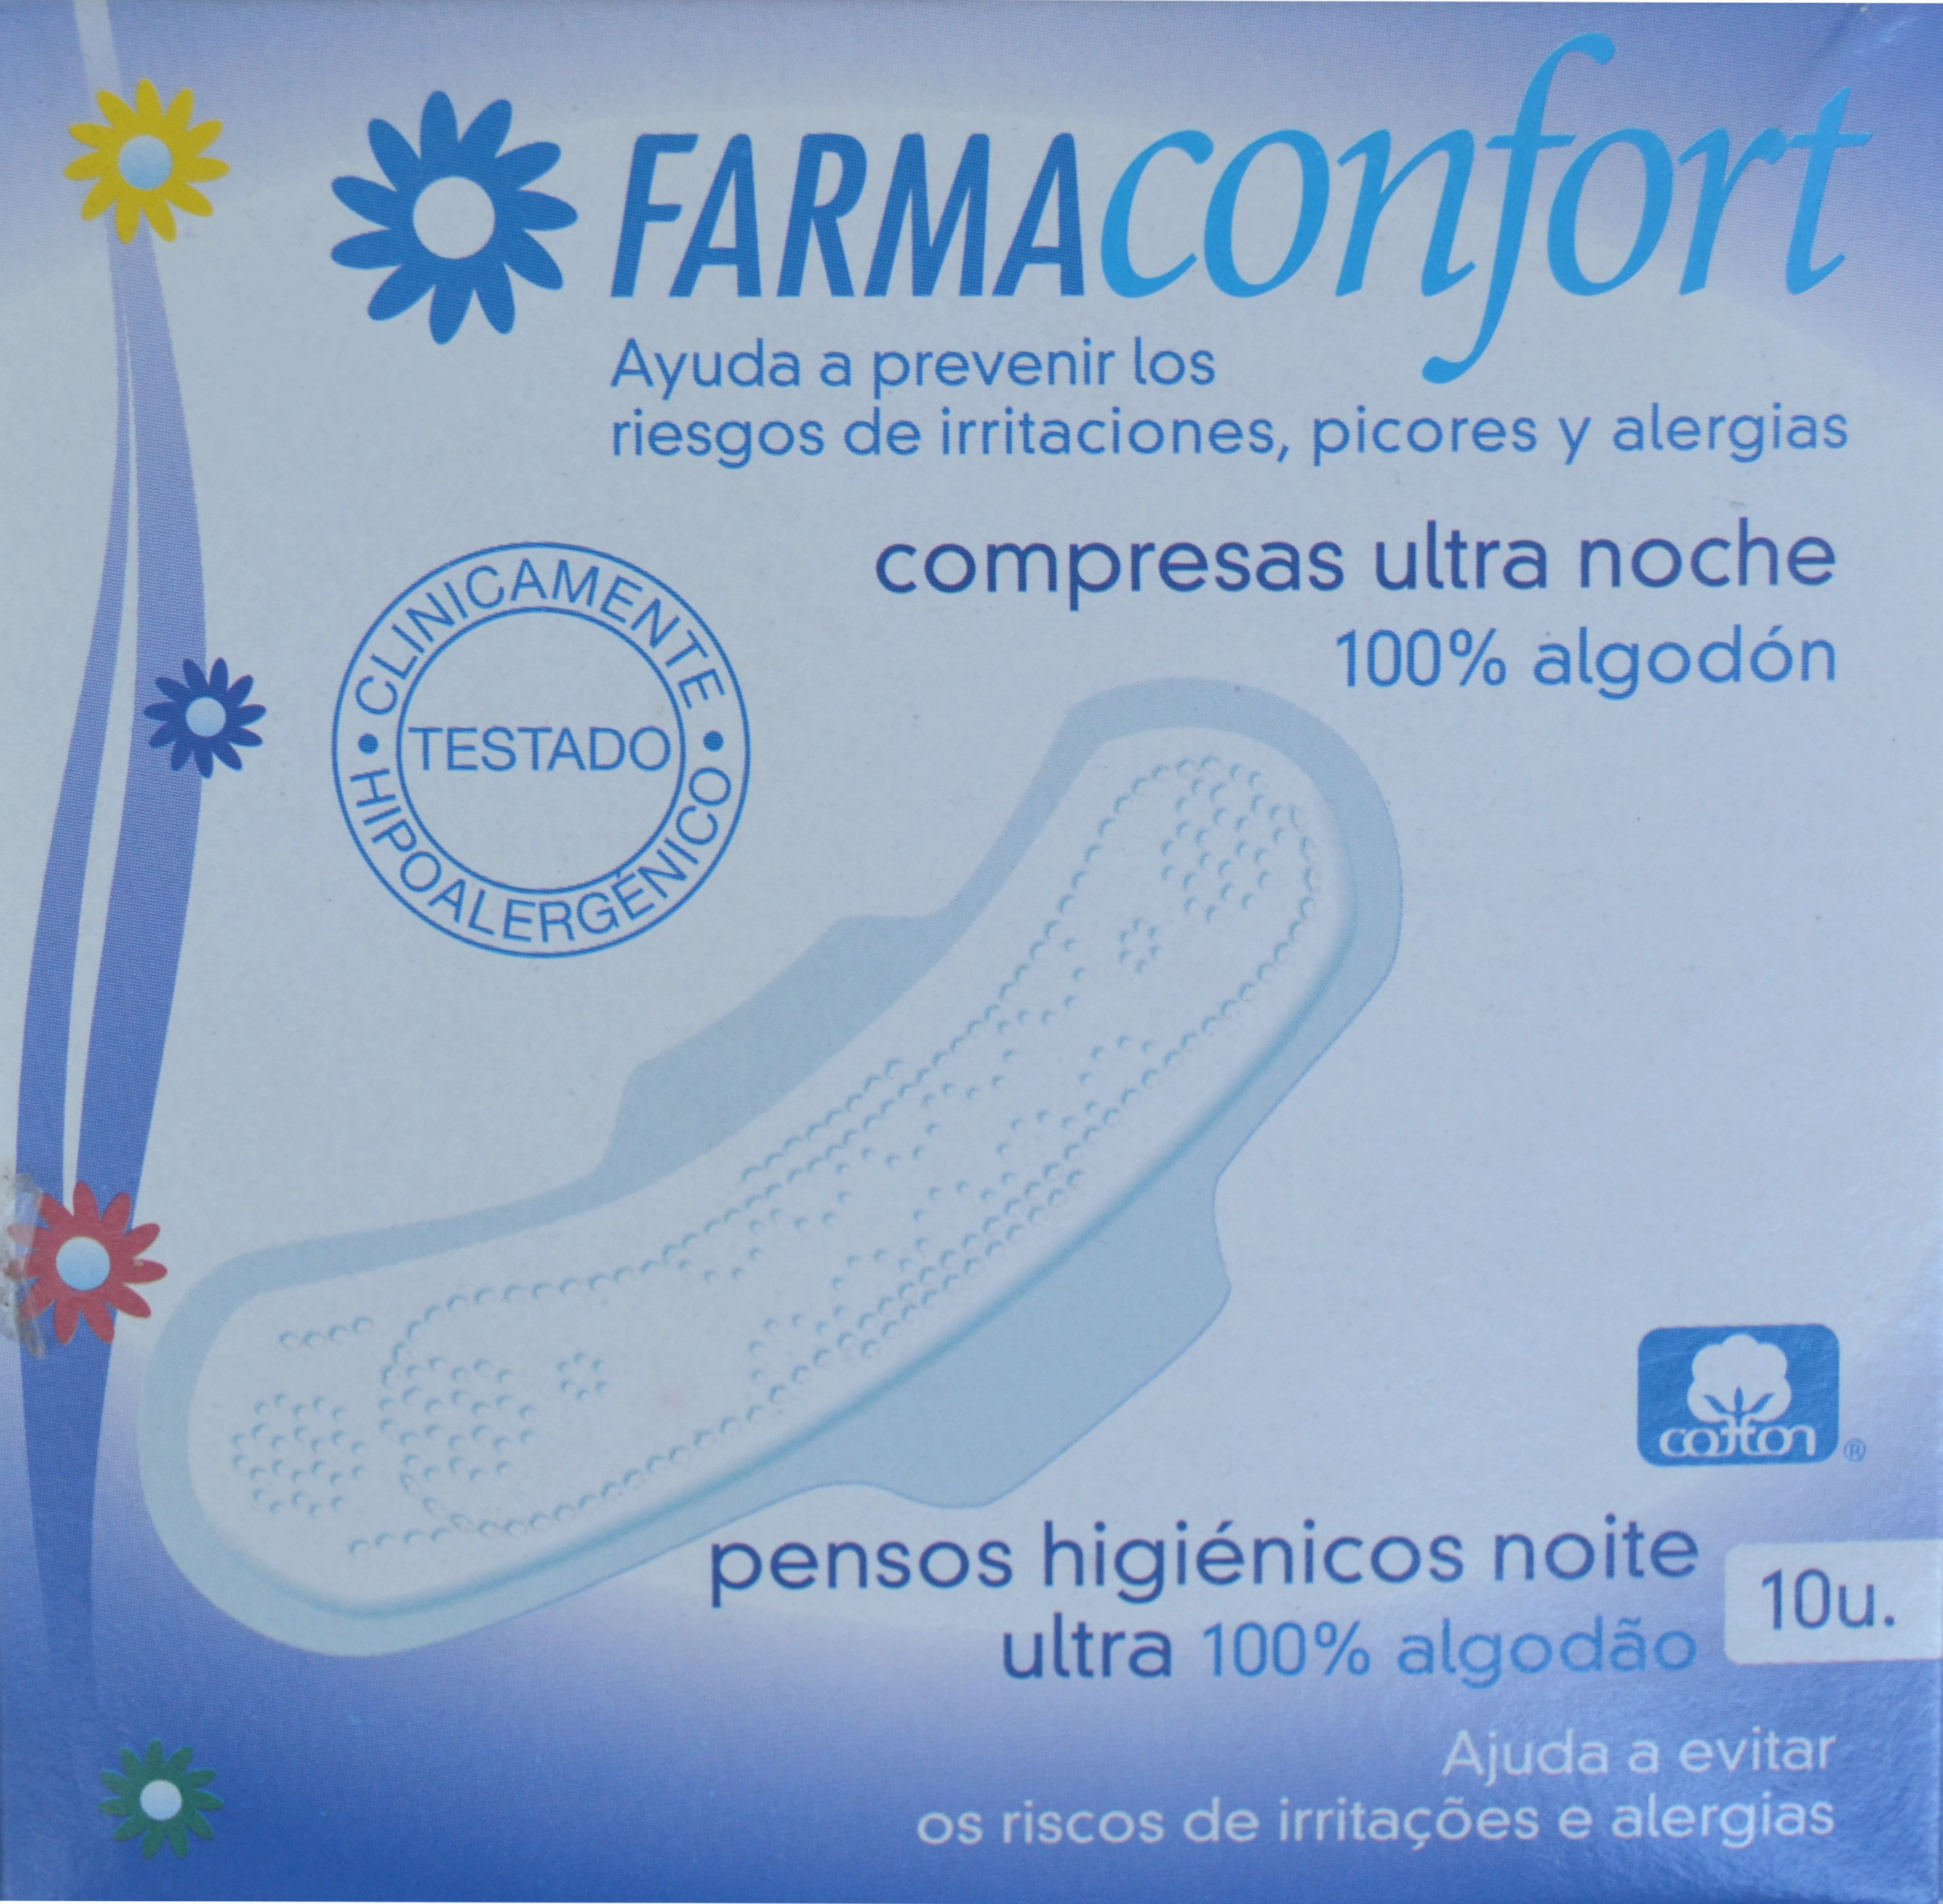 Compresas Postparto FarmaConfort